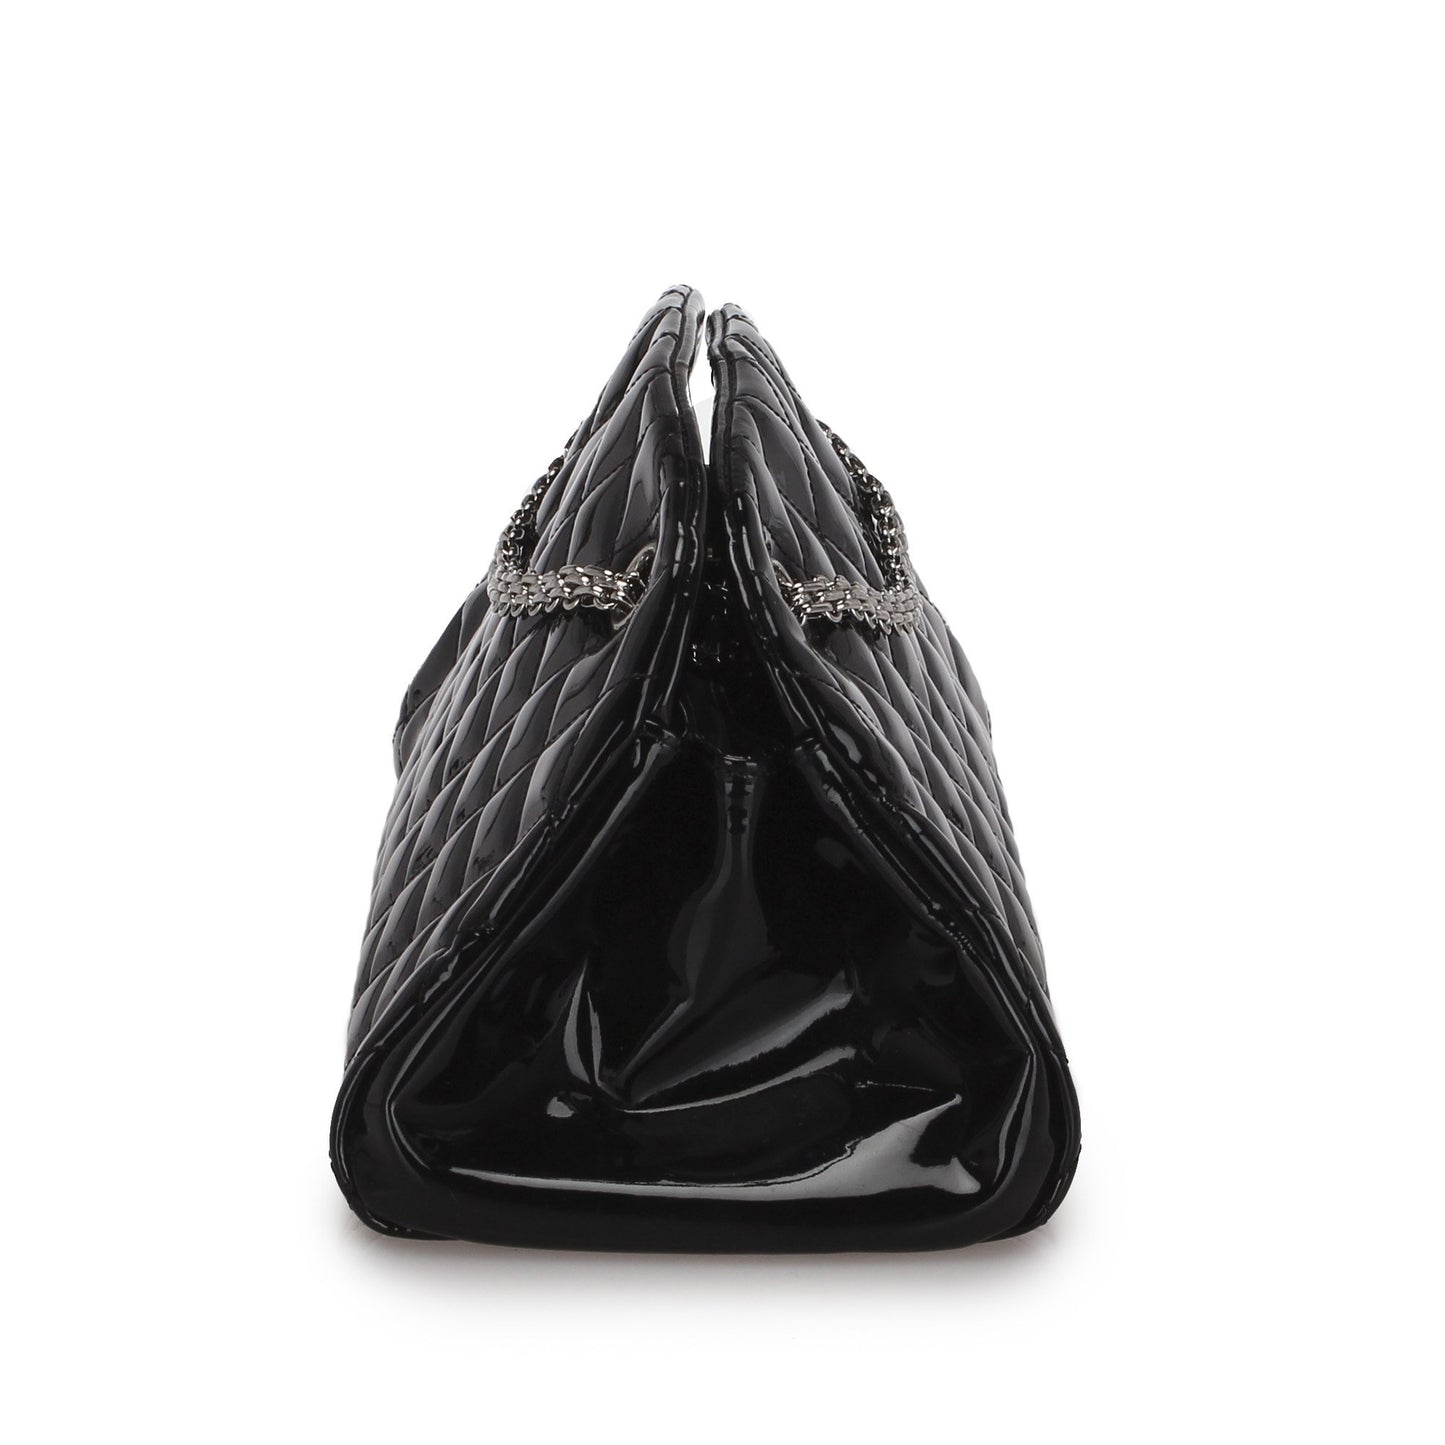 Chanel Black Mademoiselle Bowling Bag Bags Chanel 